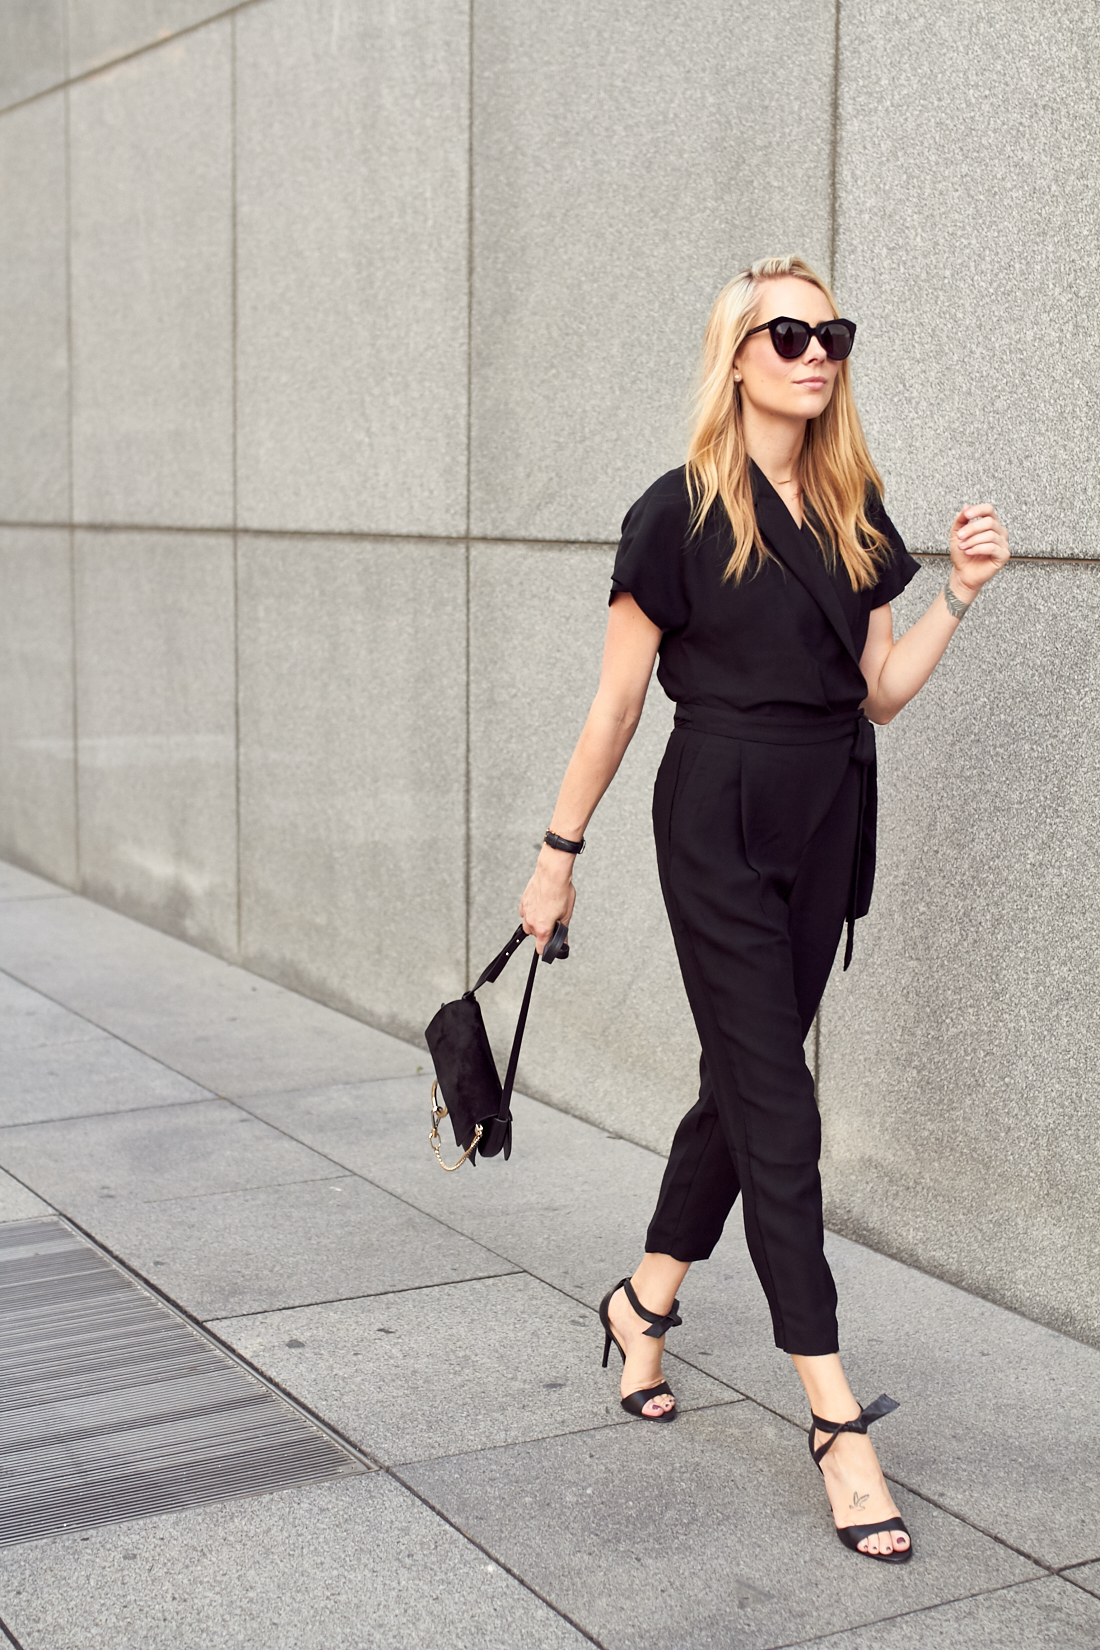 fashion-jackson-banana-republic-black-jumpsuit-chloe-drew-handbag-black-bowtie-heels-black-sunglasses